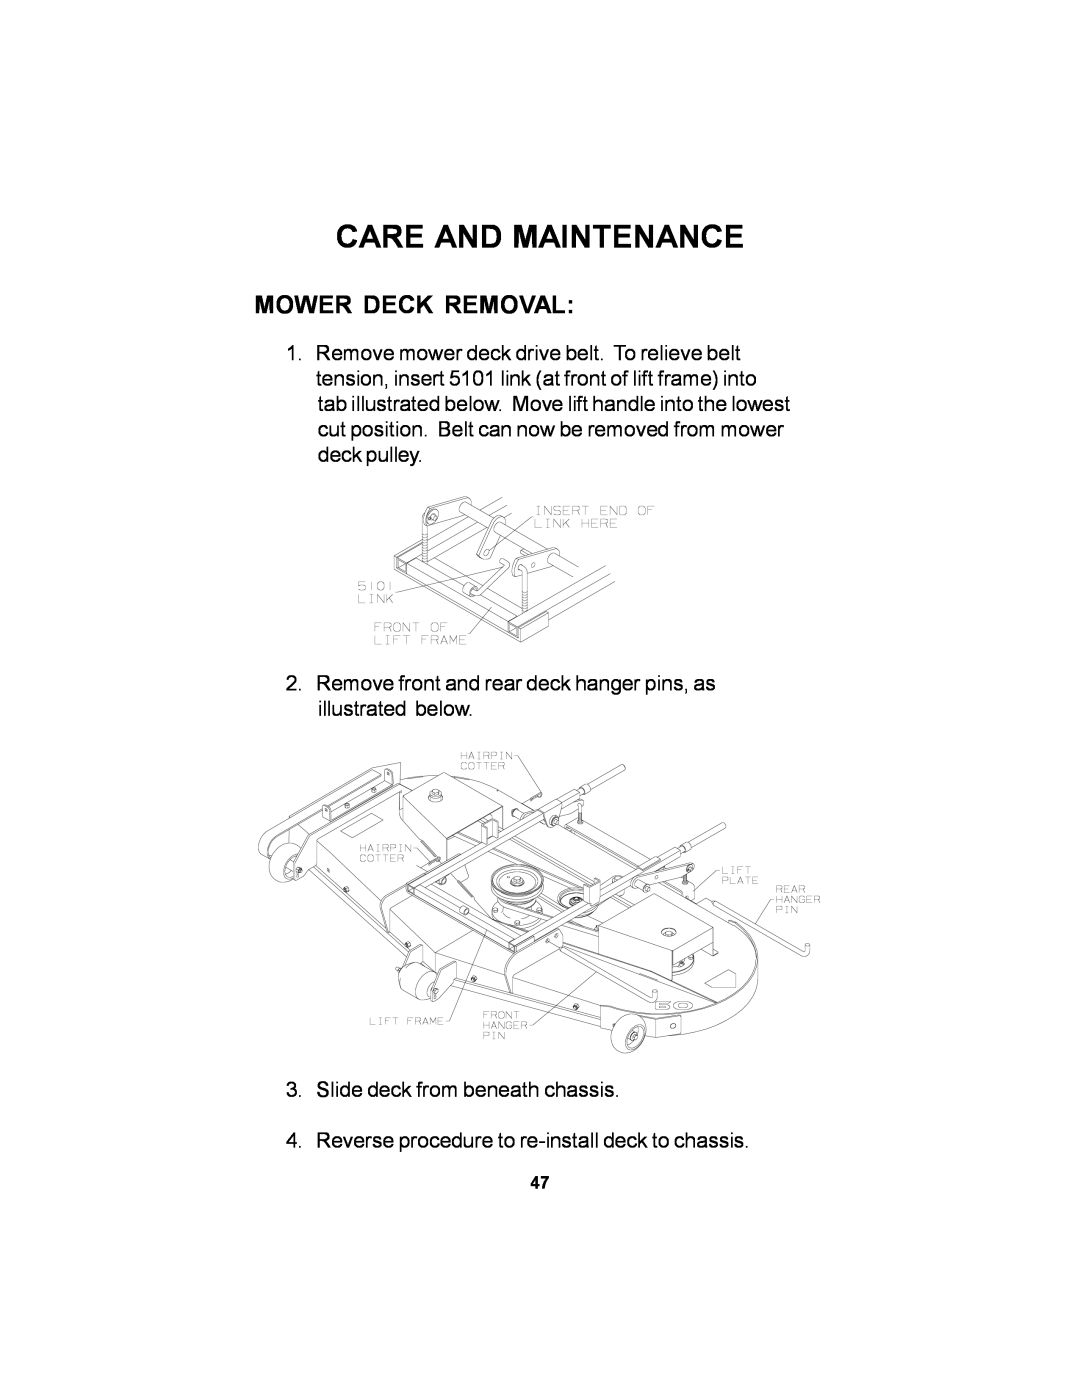 Dixon ELS 60 manual Mower Deck Removal, Care And Maintenance 